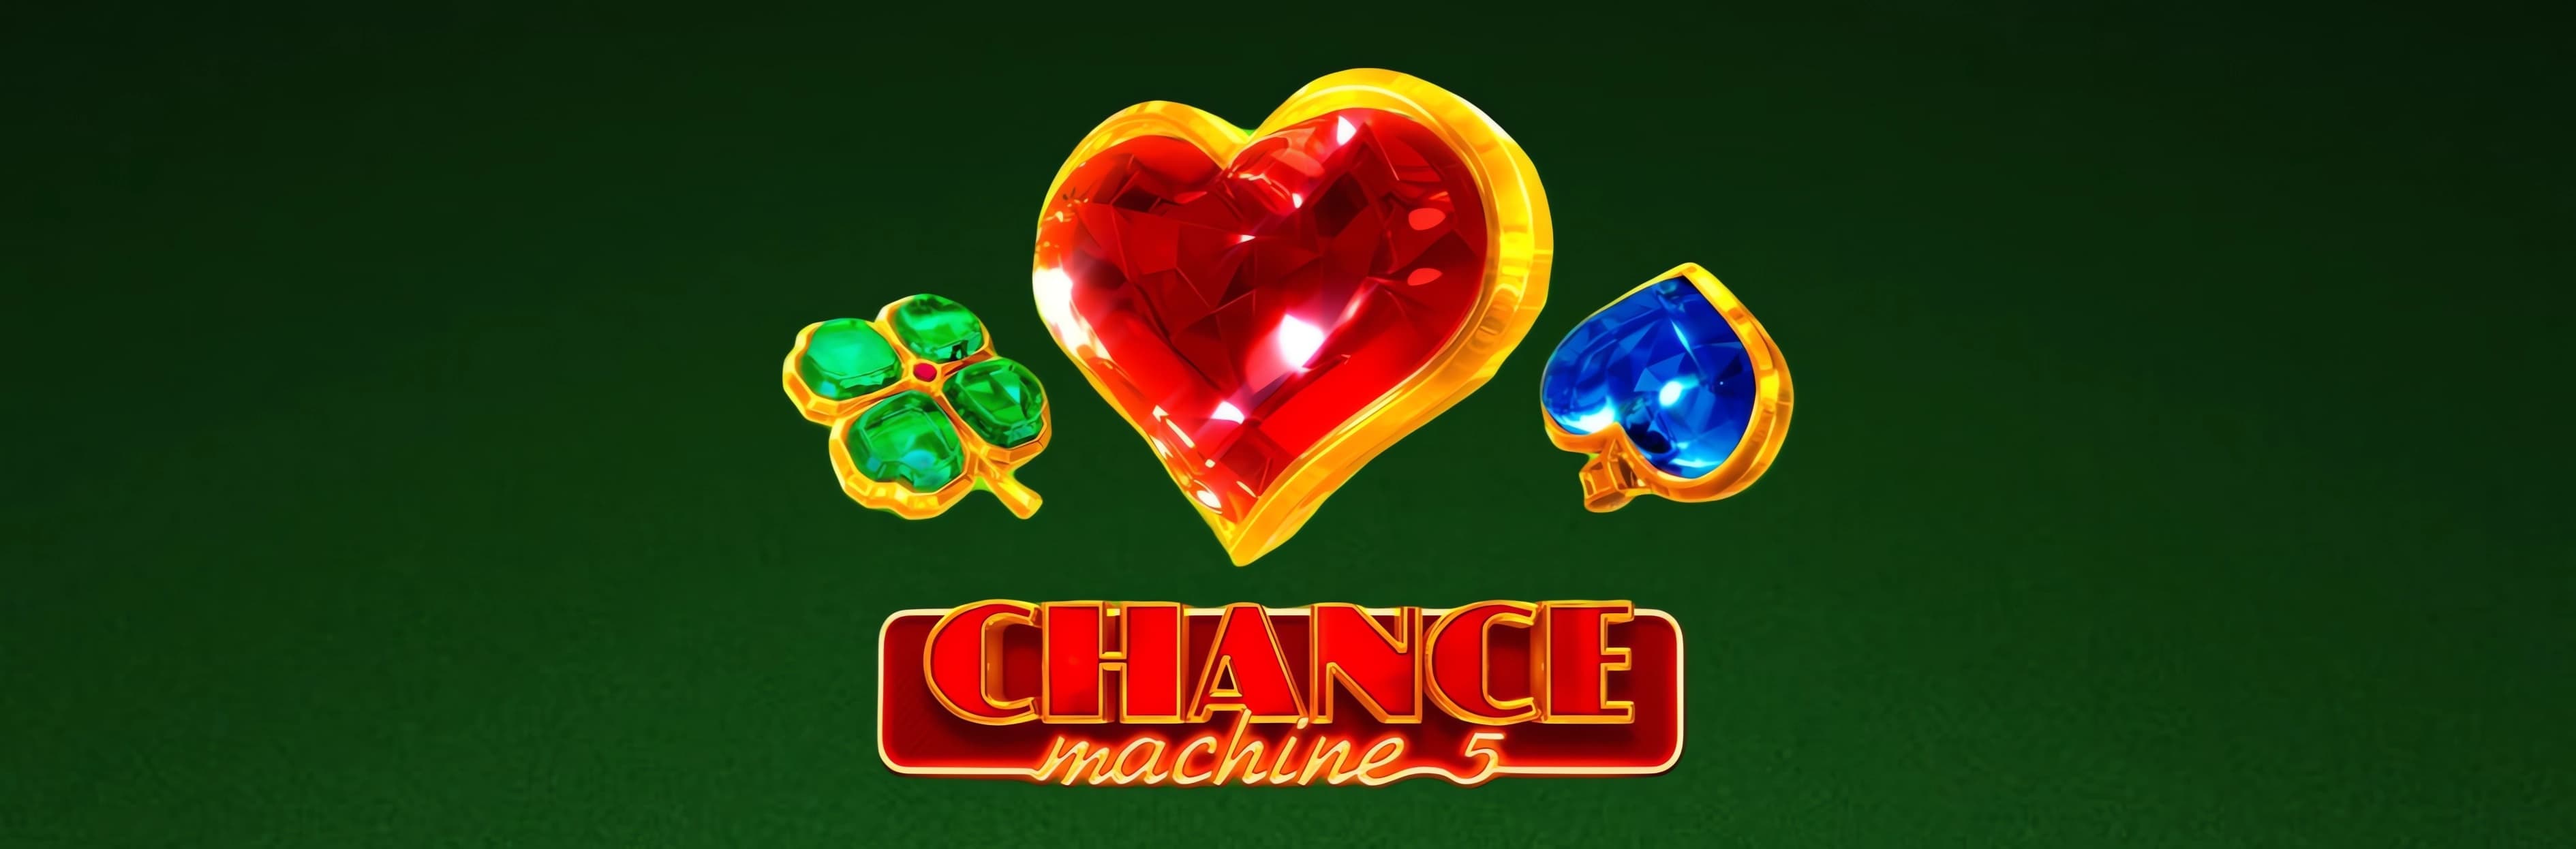 Chance Machine 5 cover